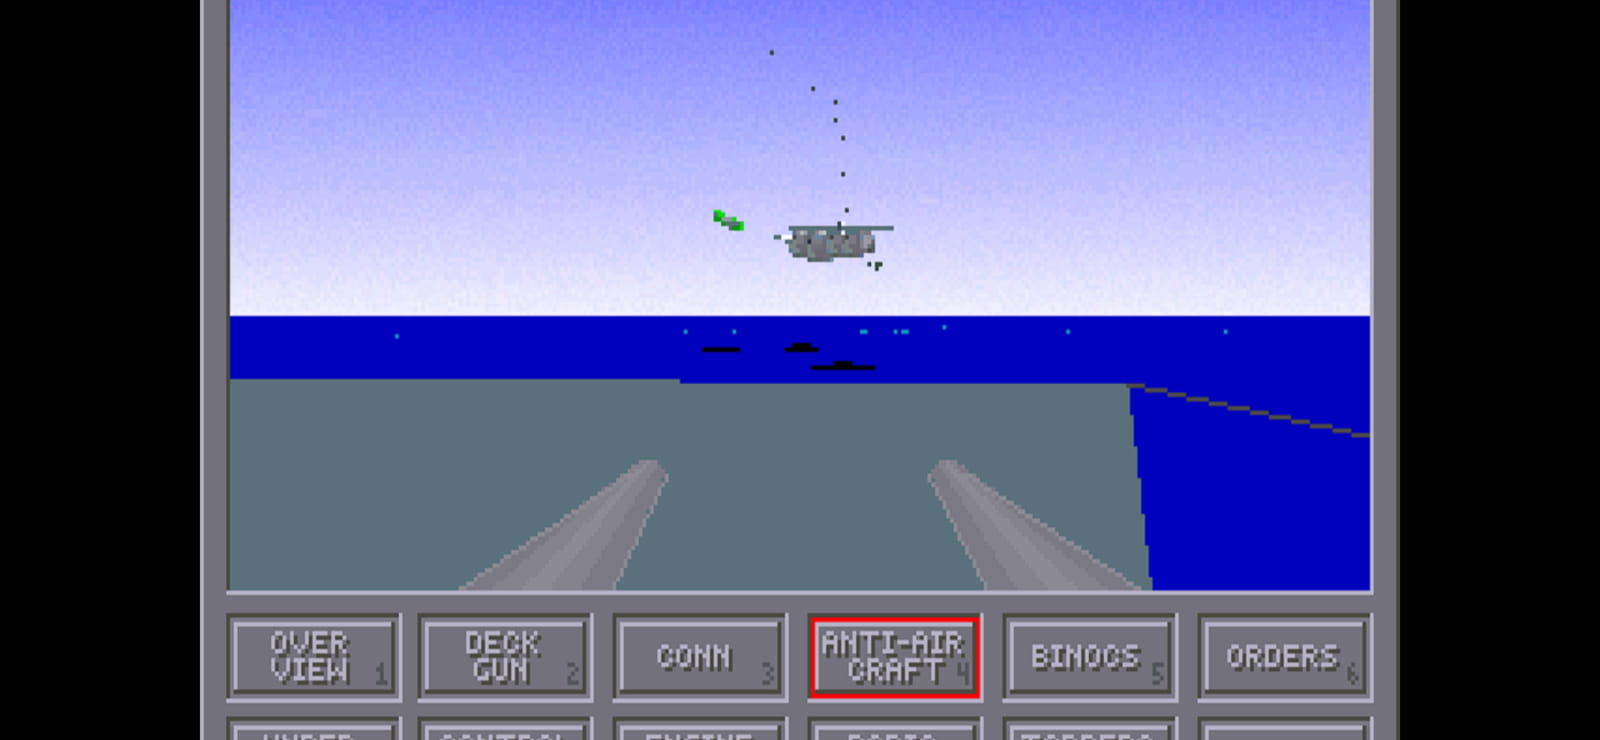 Das Boot: German U-Boat Simulation